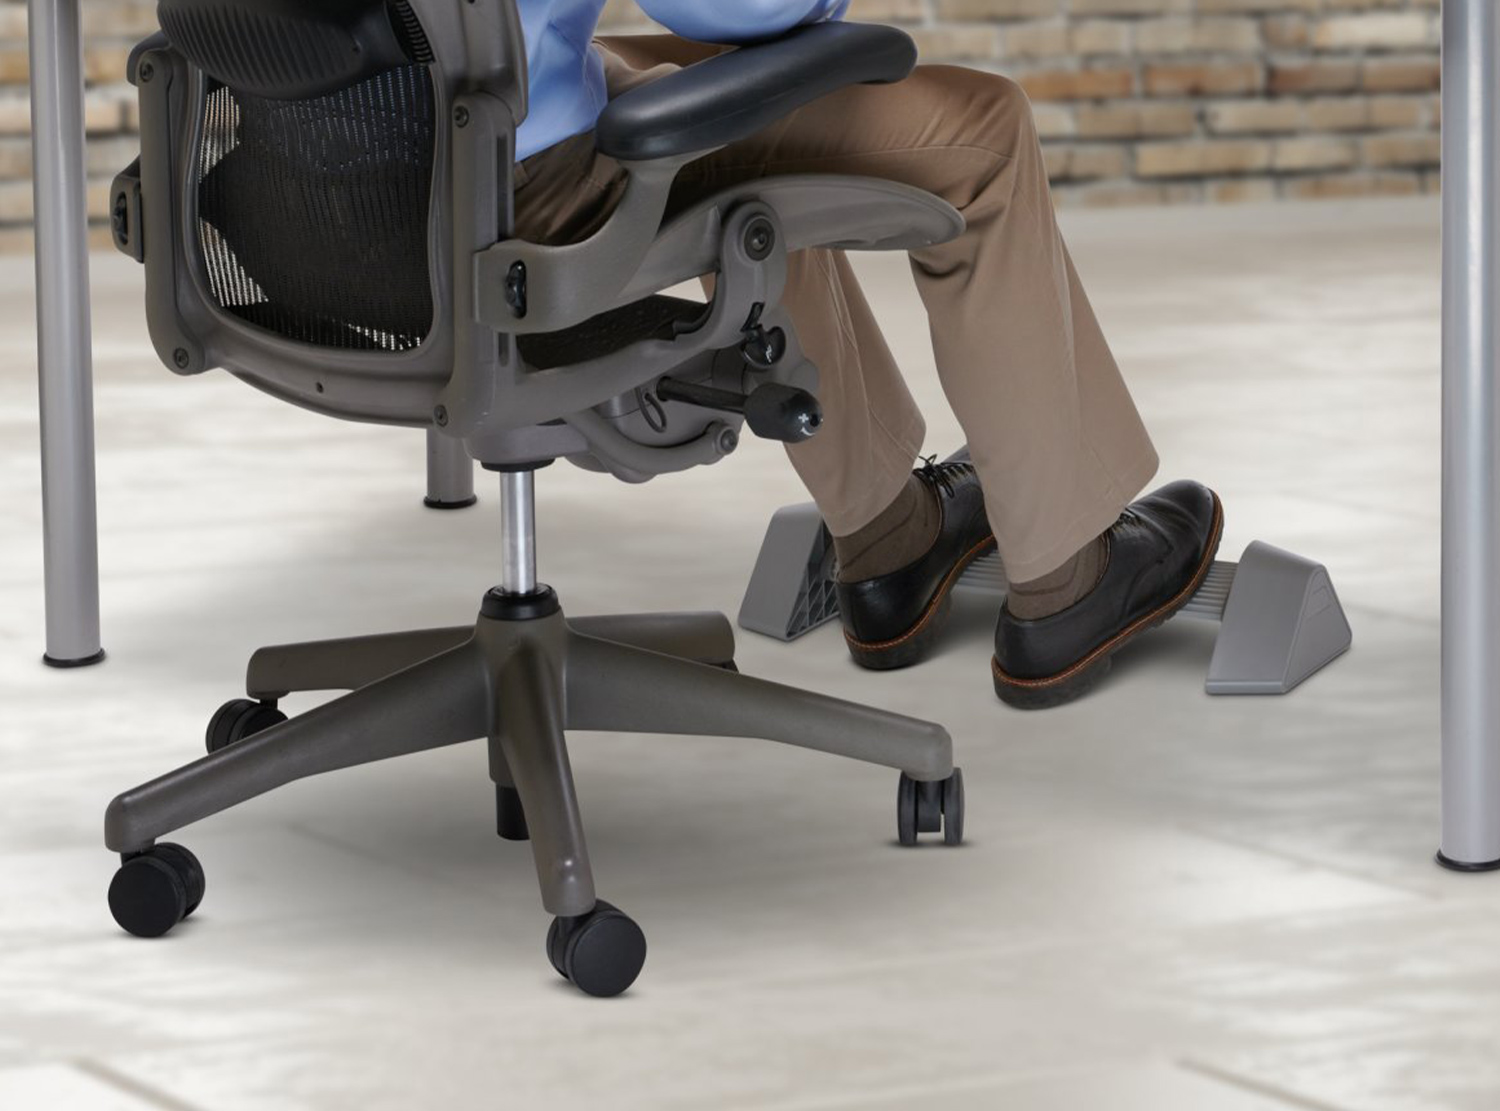 Three Benefits of Using an Under Desk Foot Hammock